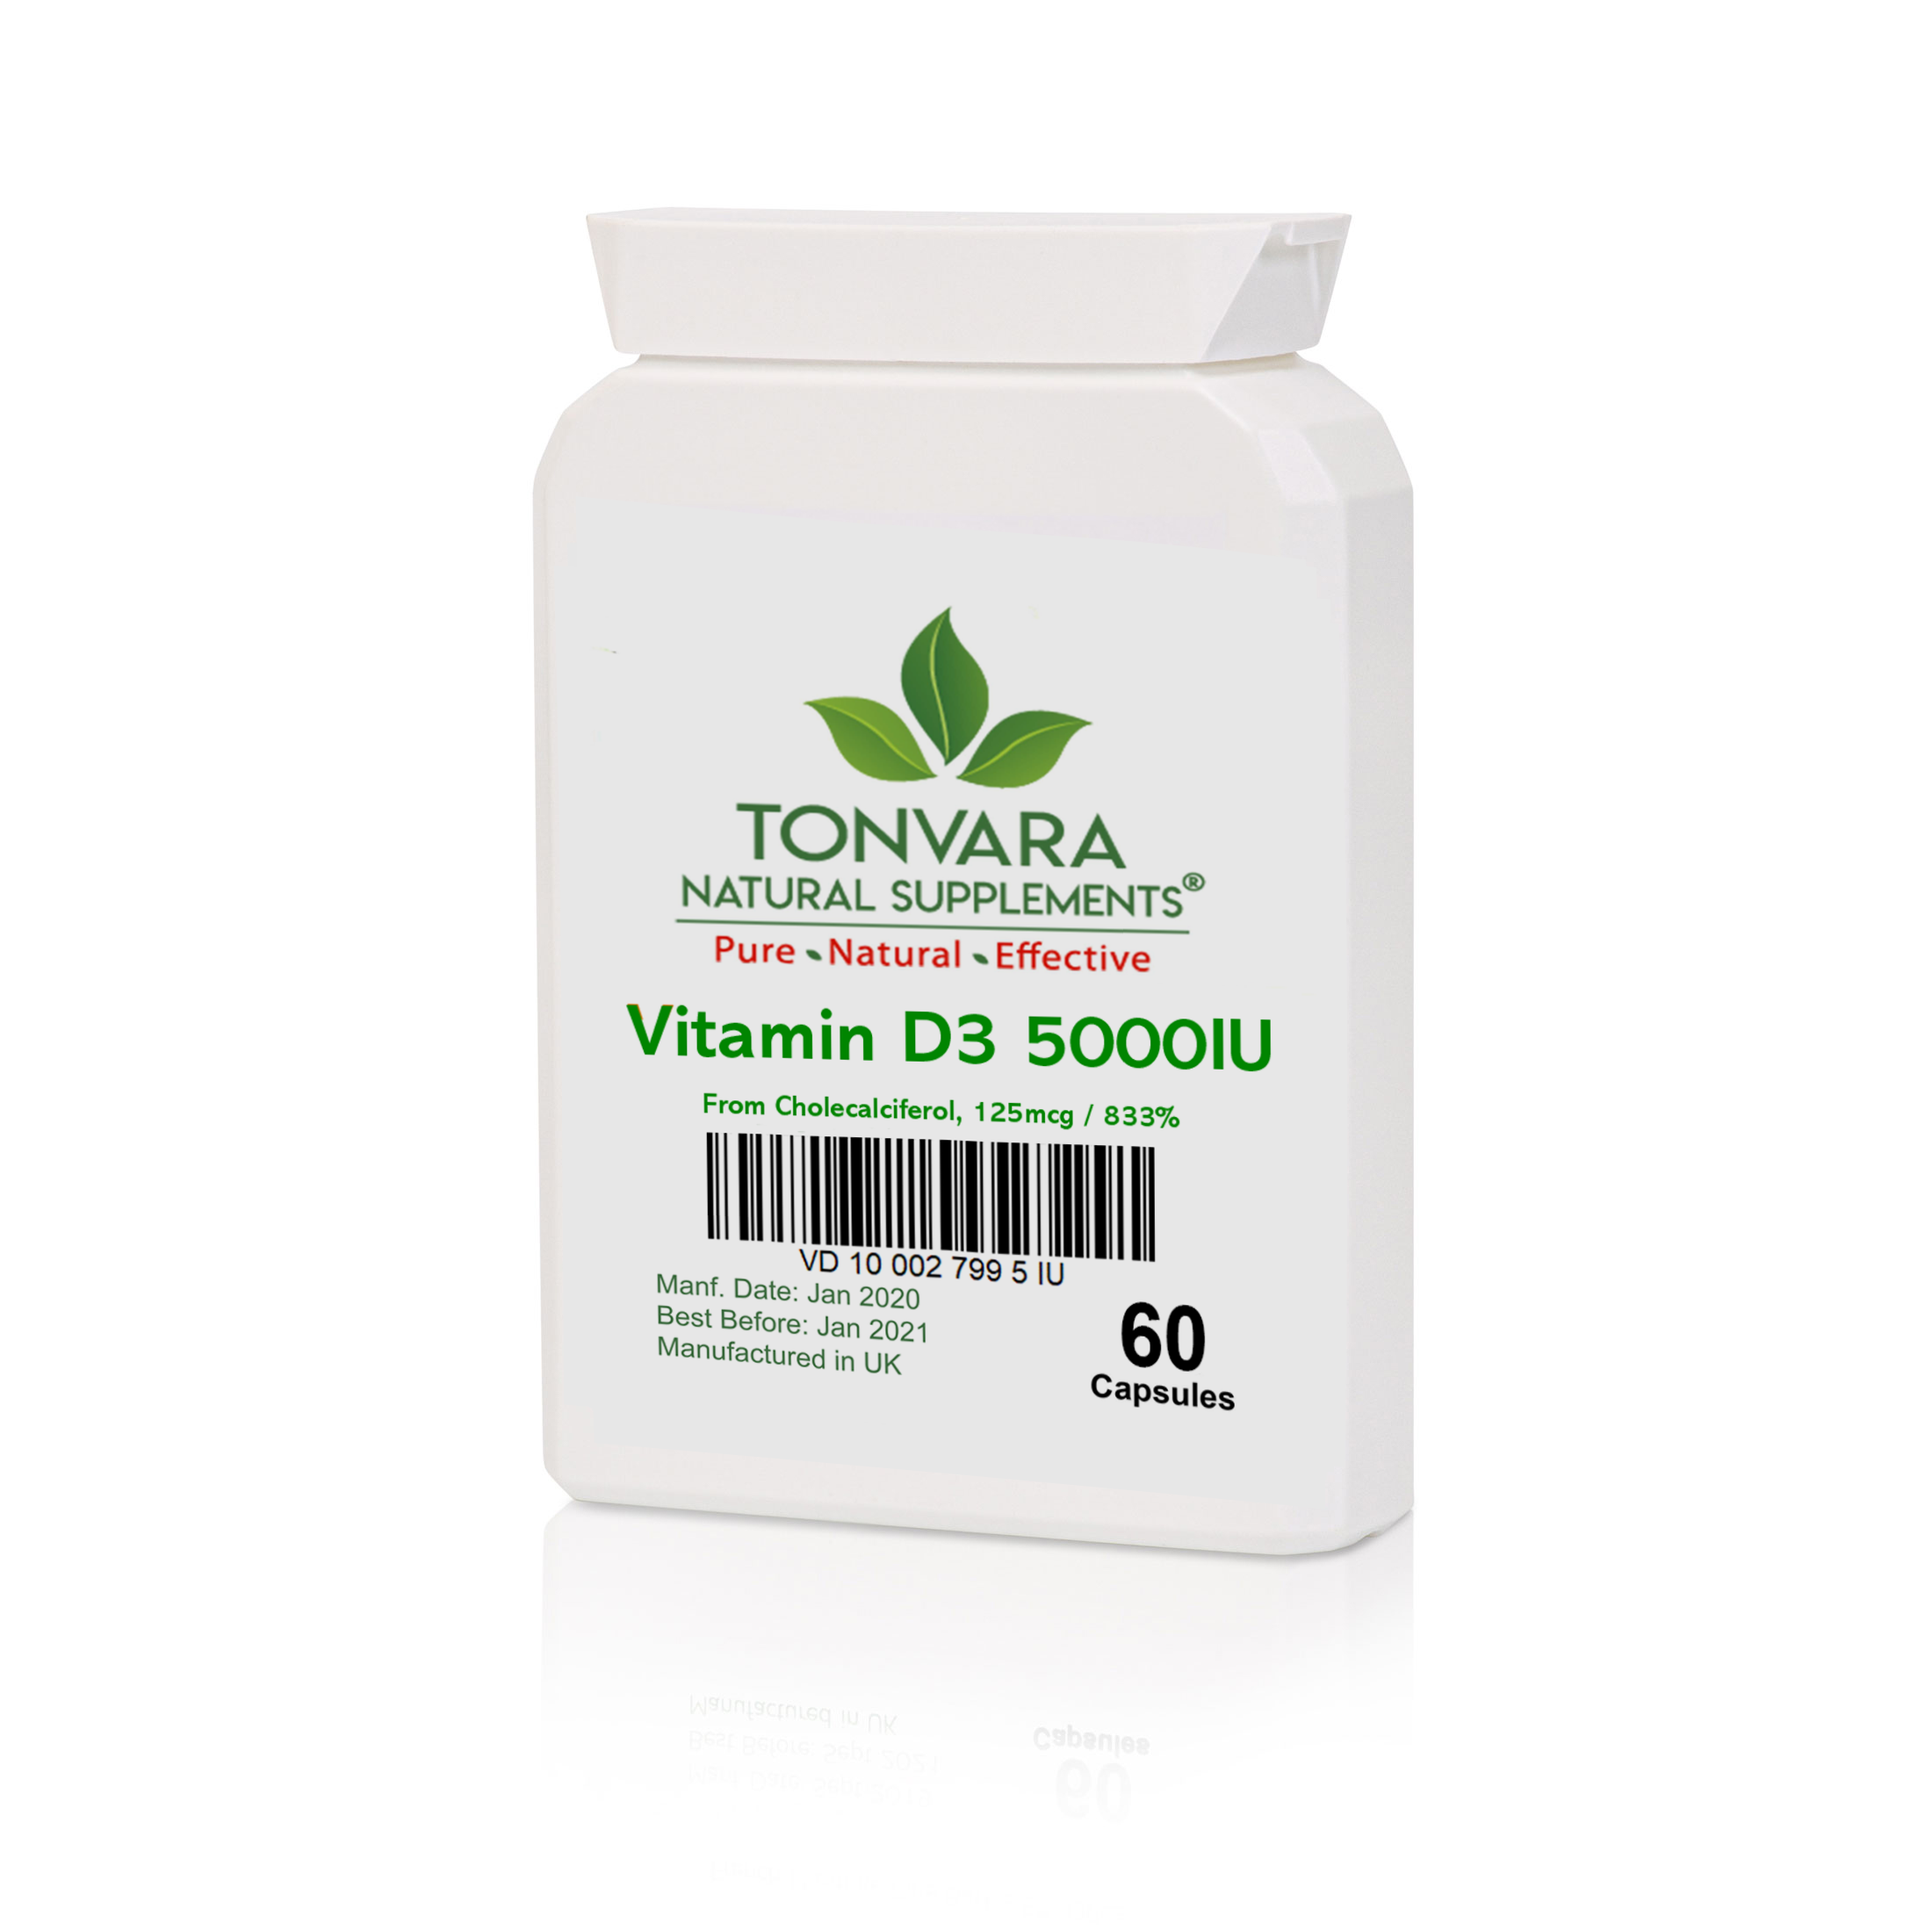 Tonvara Vitamin D3 5000IU From Cholecalciferol, 125mcg / 833%